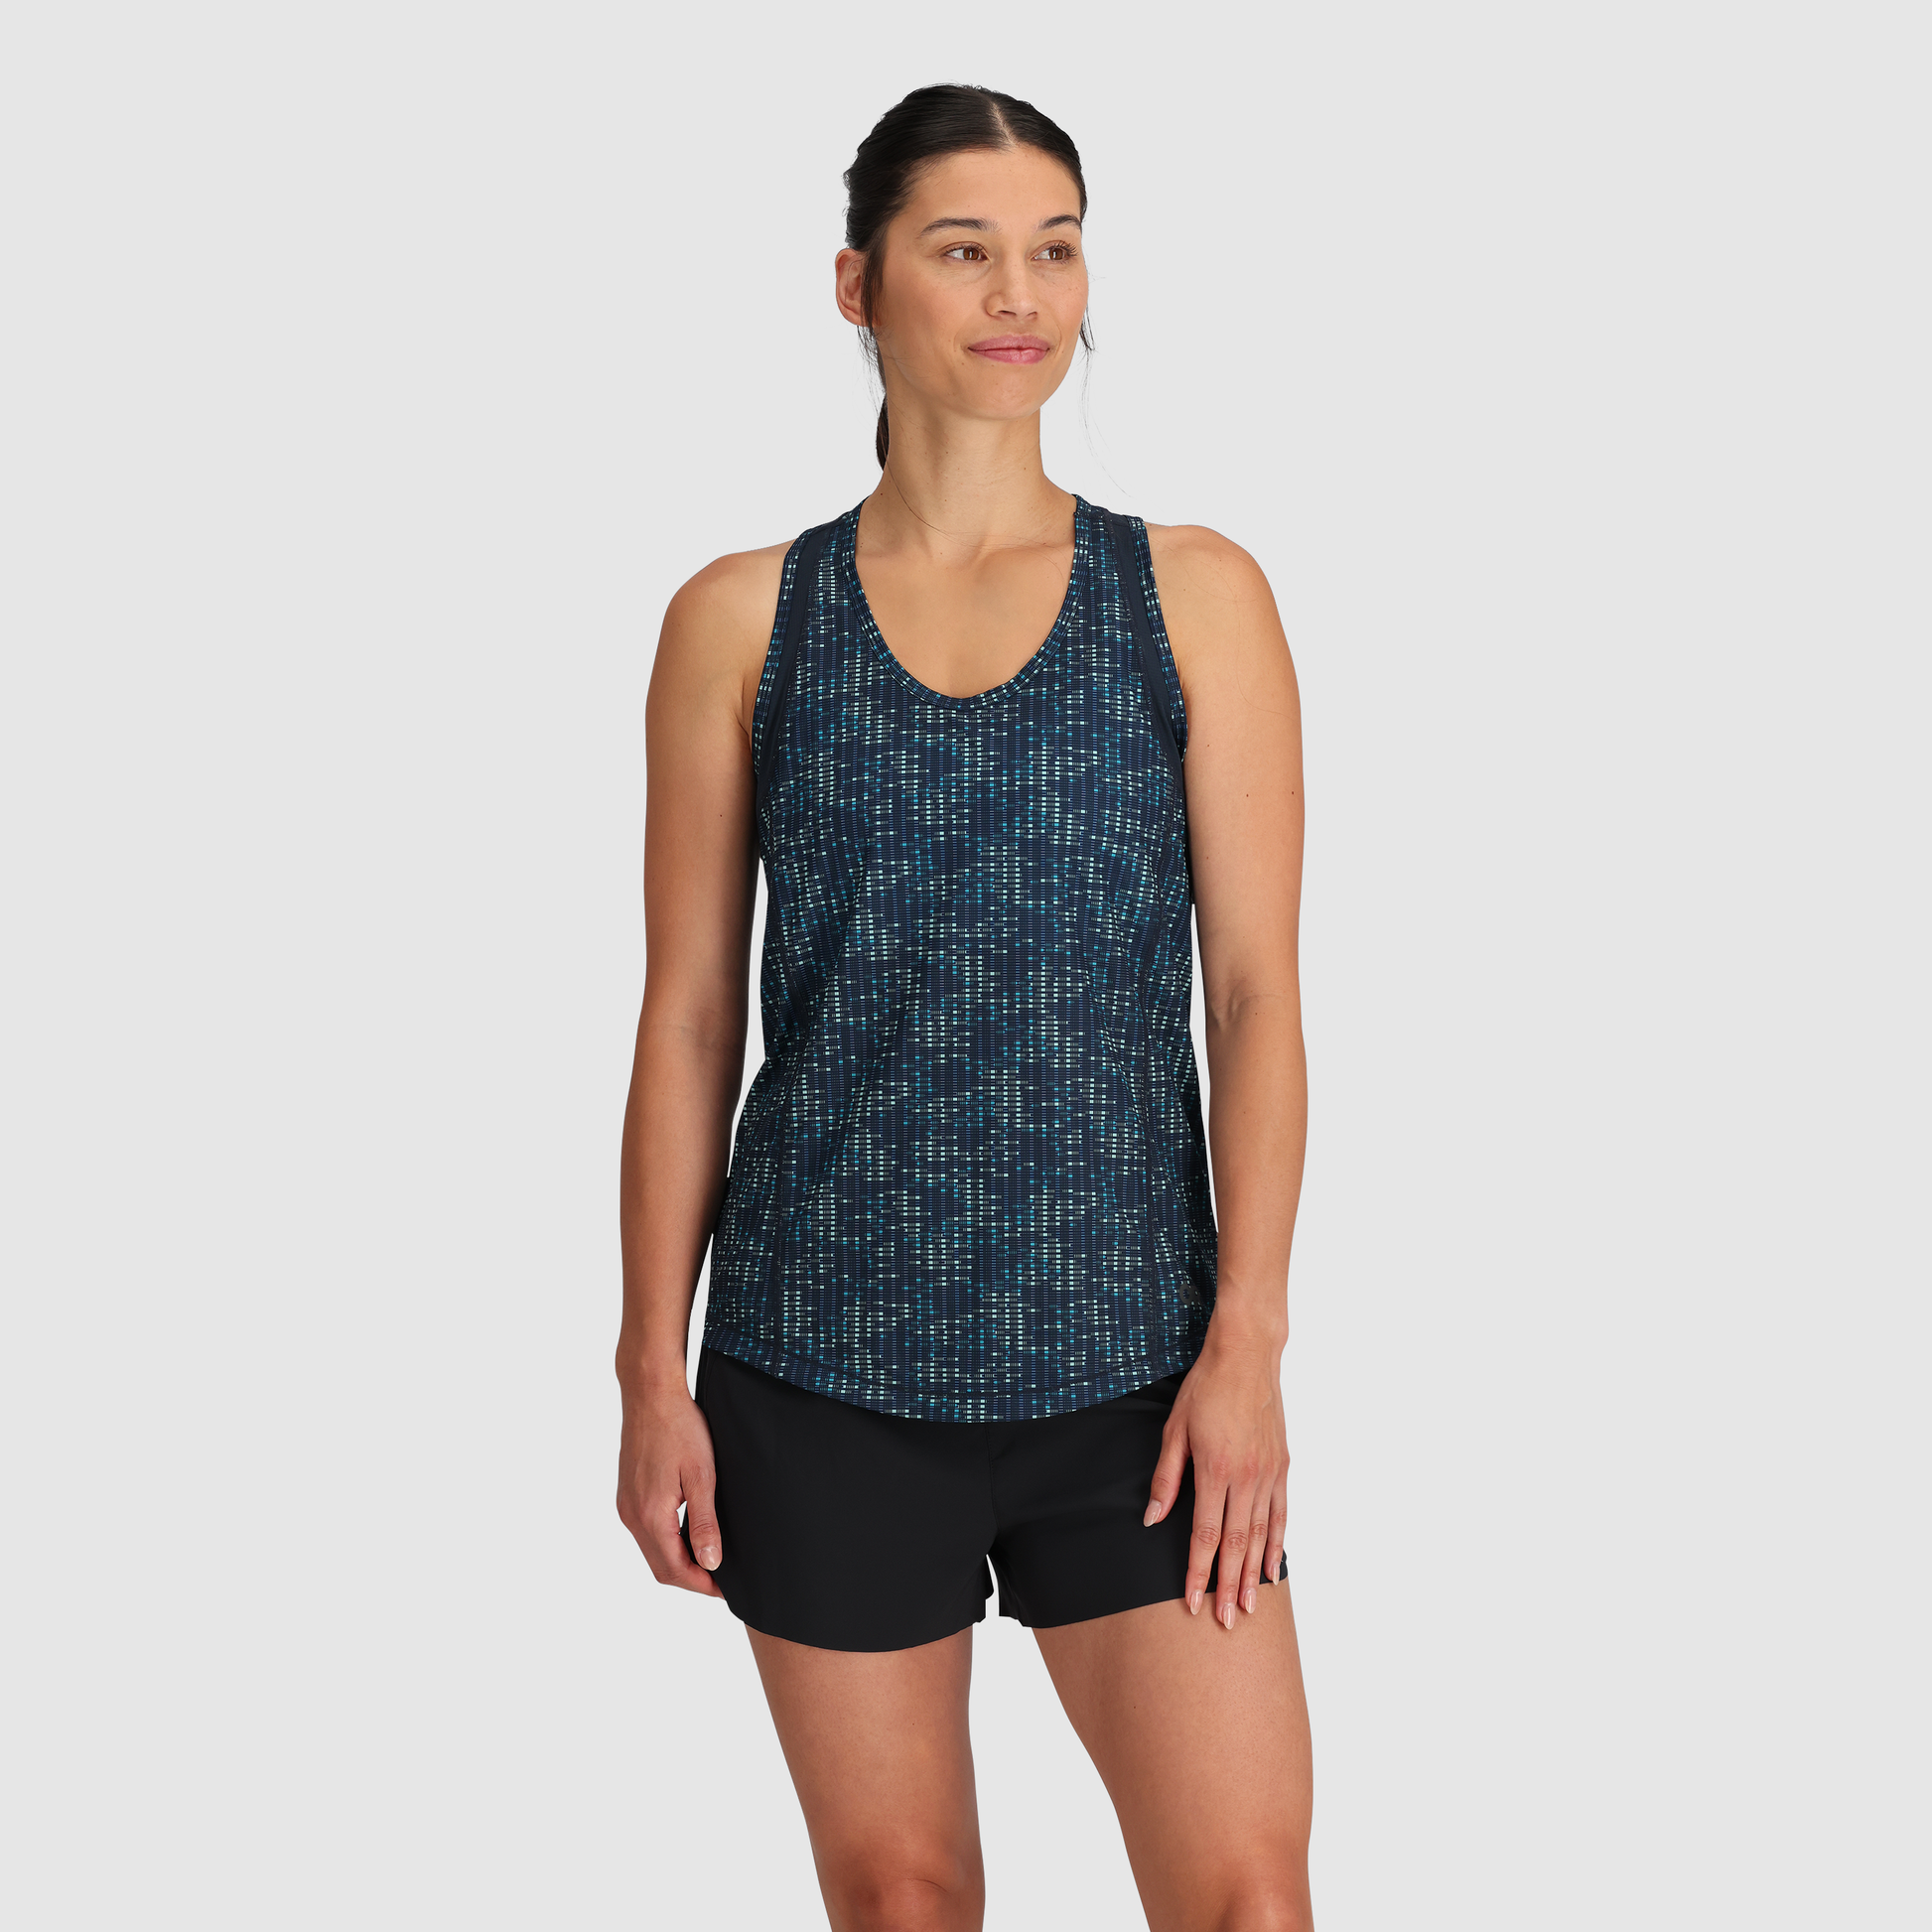 Drying Vest Women's Running Mesh Sports Sleeveless Quick Yoga Hood